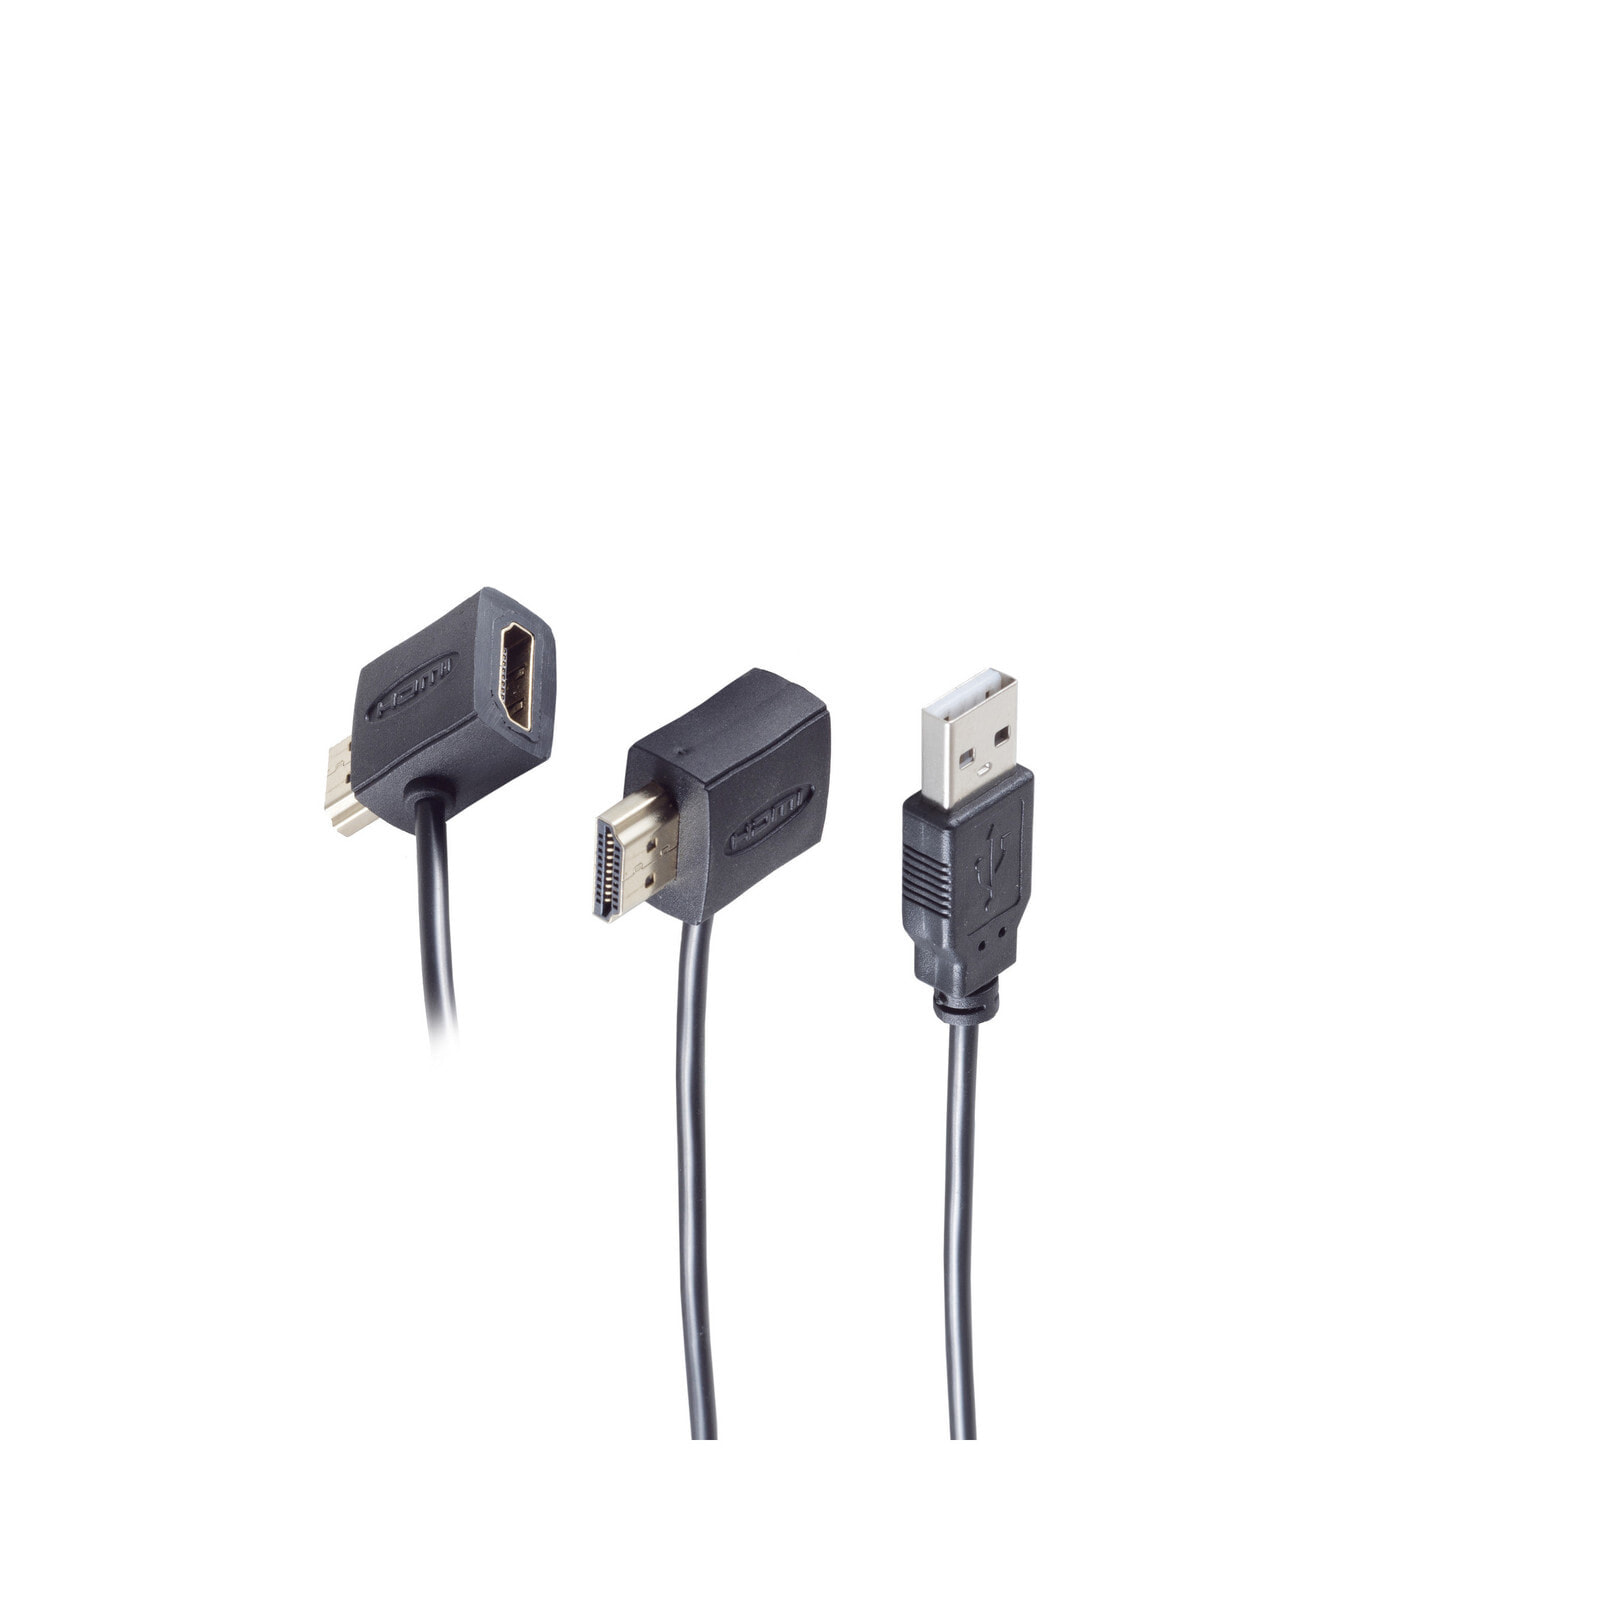 shiverpeaks BS10-01002 видео кабель адаптер 0,5 m HDMI Тип A (Стандарт) HDMI + USB Черный